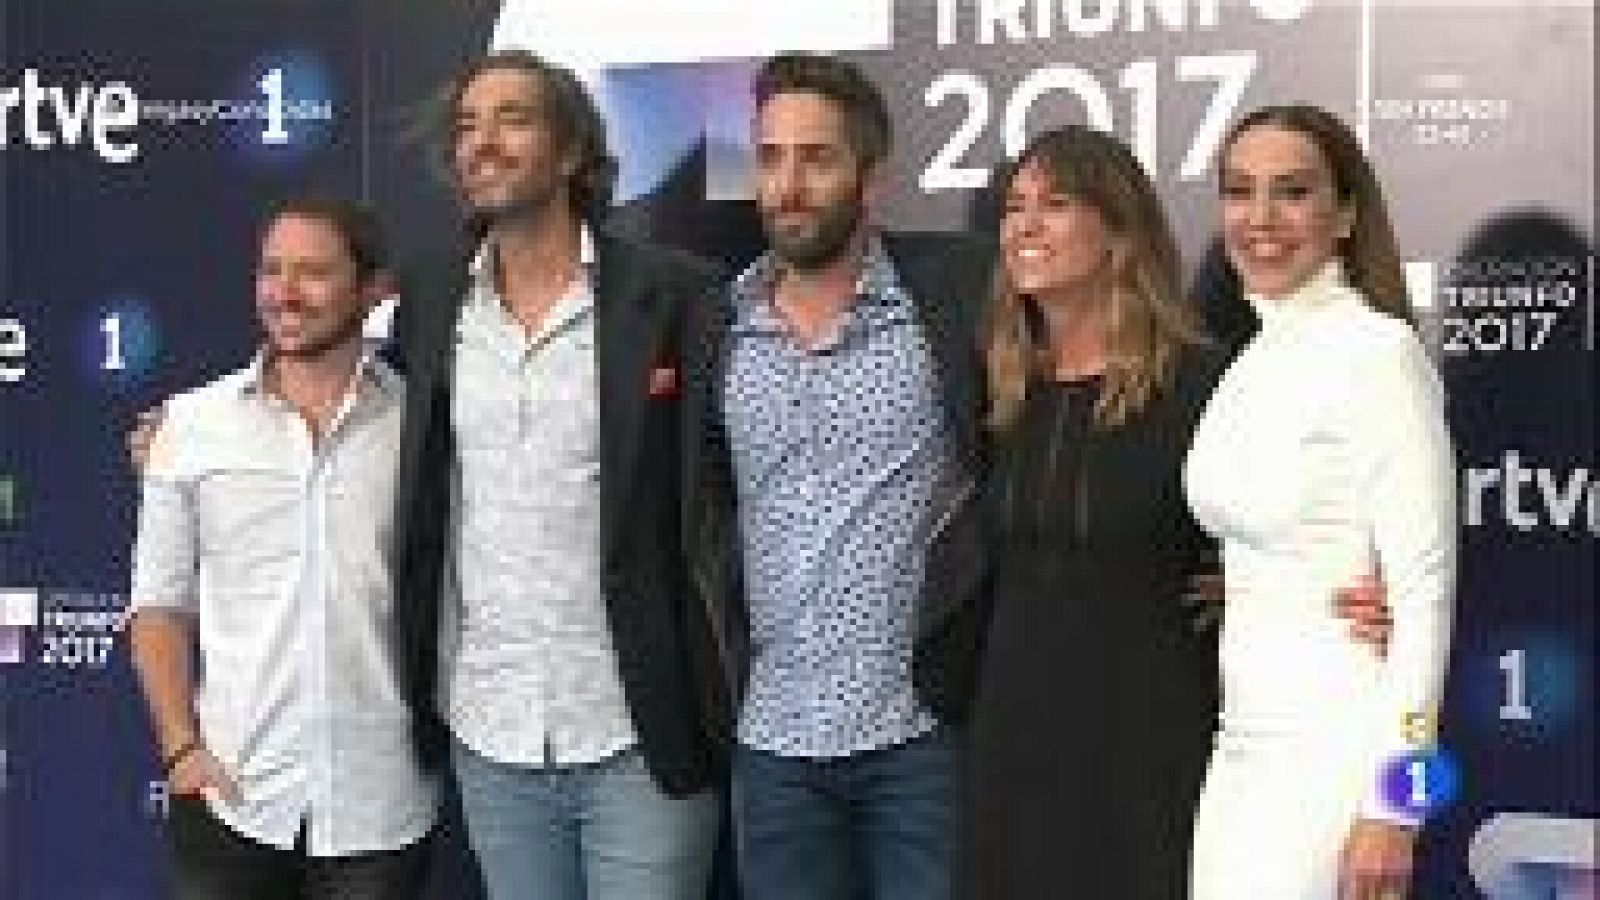 TVE premiada en el Festival de Vitoria